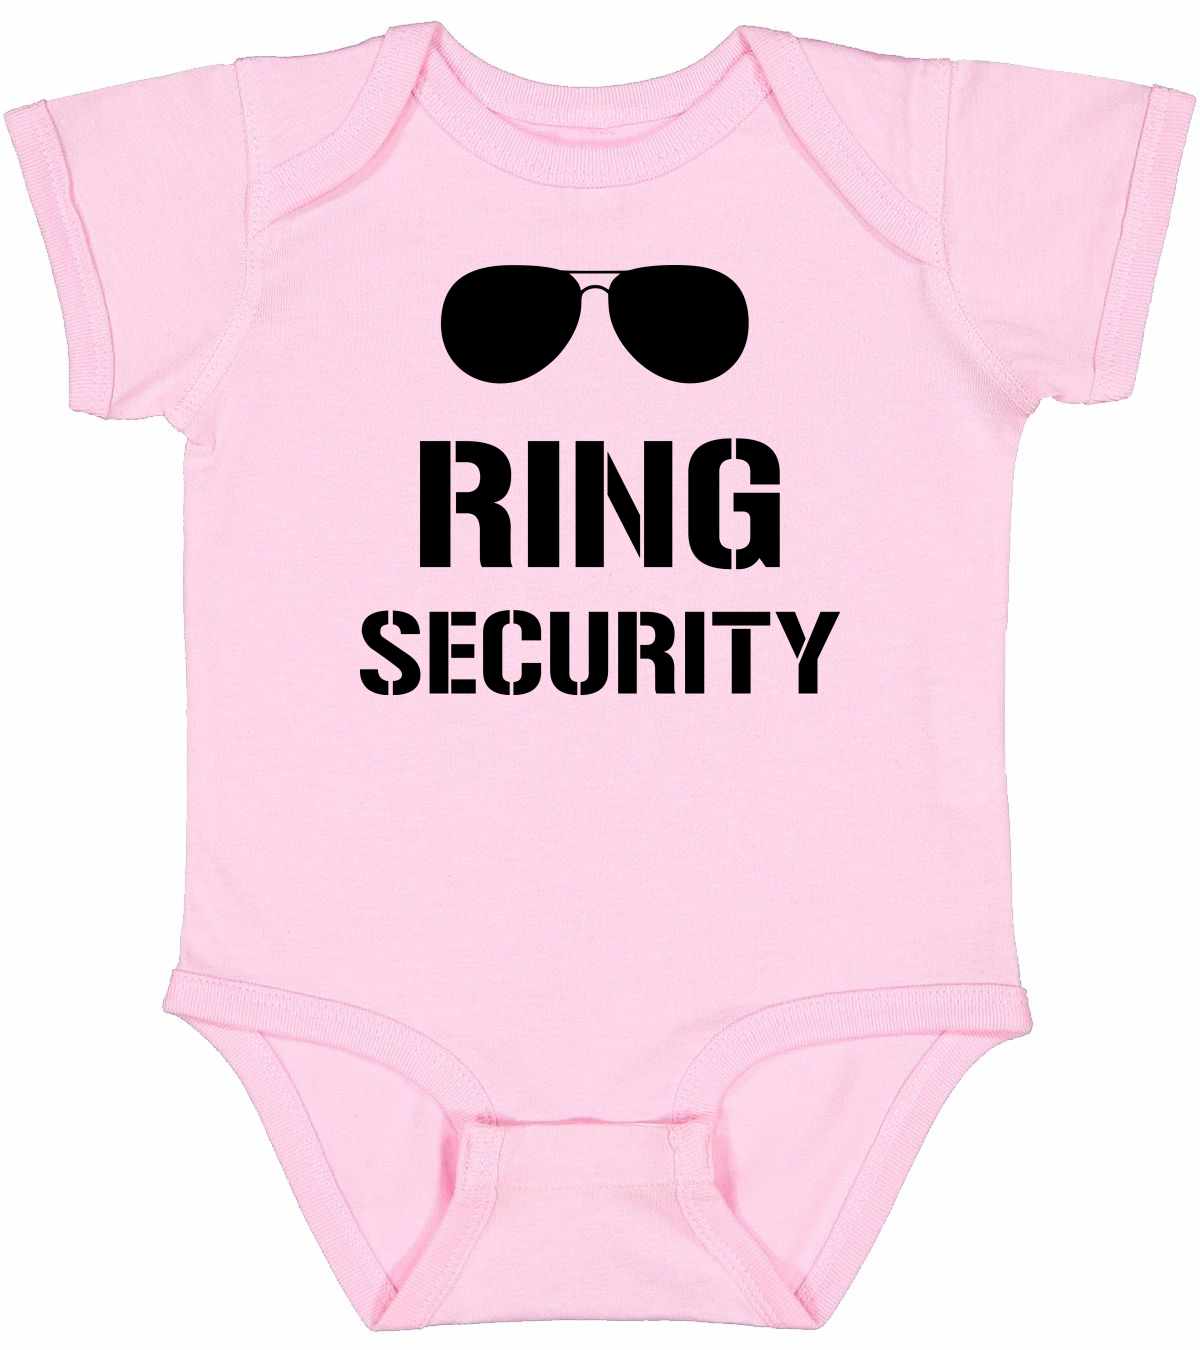 Ring Security on Infant BodySuit (#1011-10)